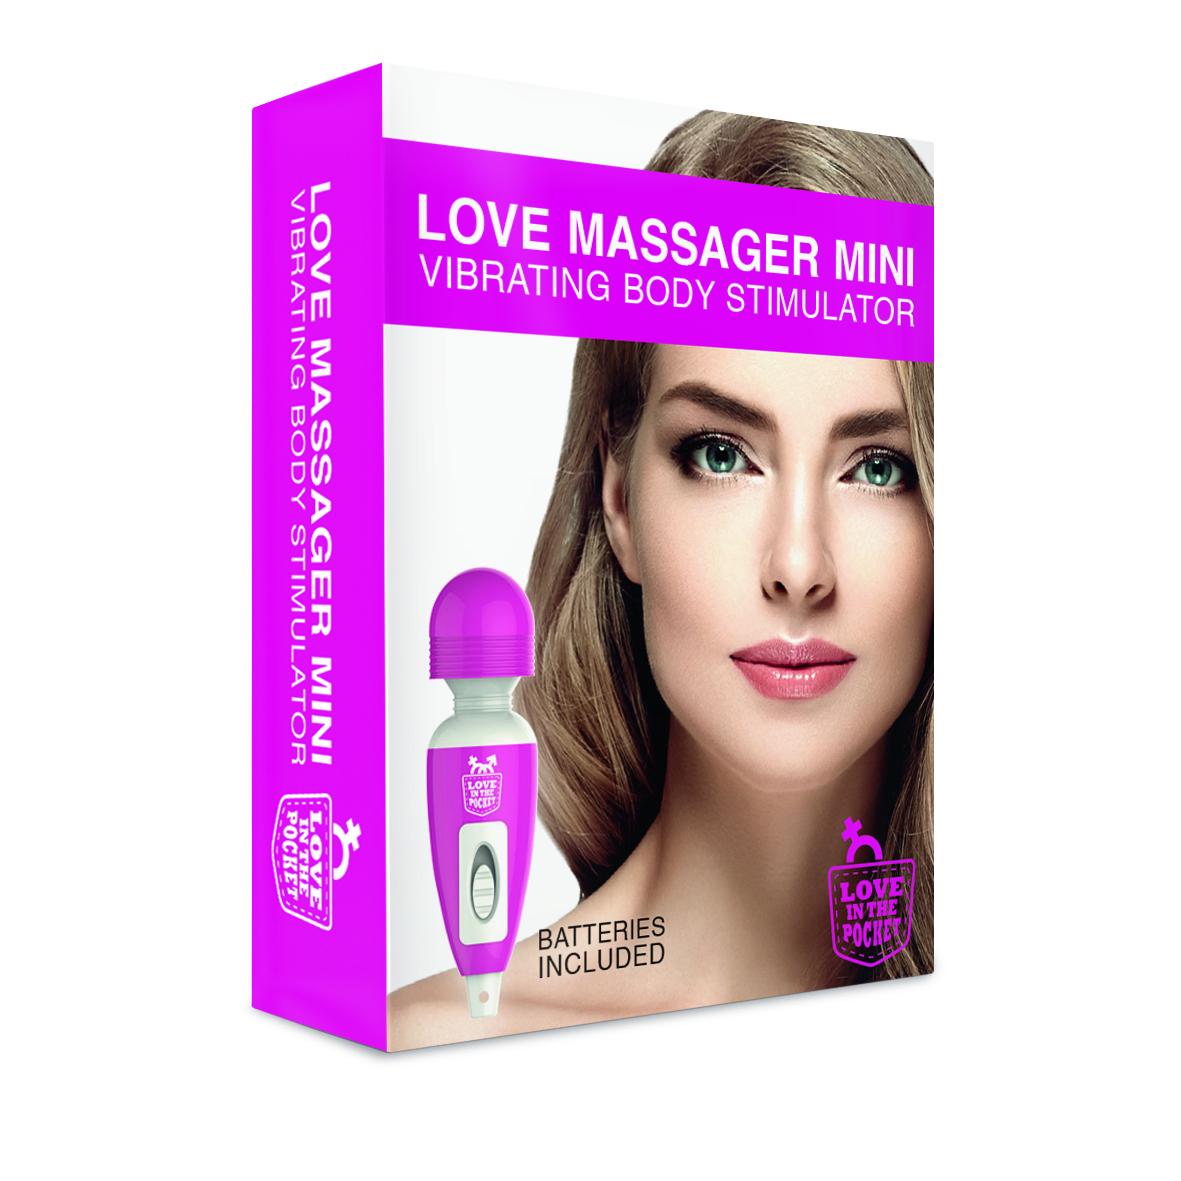 Love In The Pocket - Love Massager Mini Vibrating Body Stimu